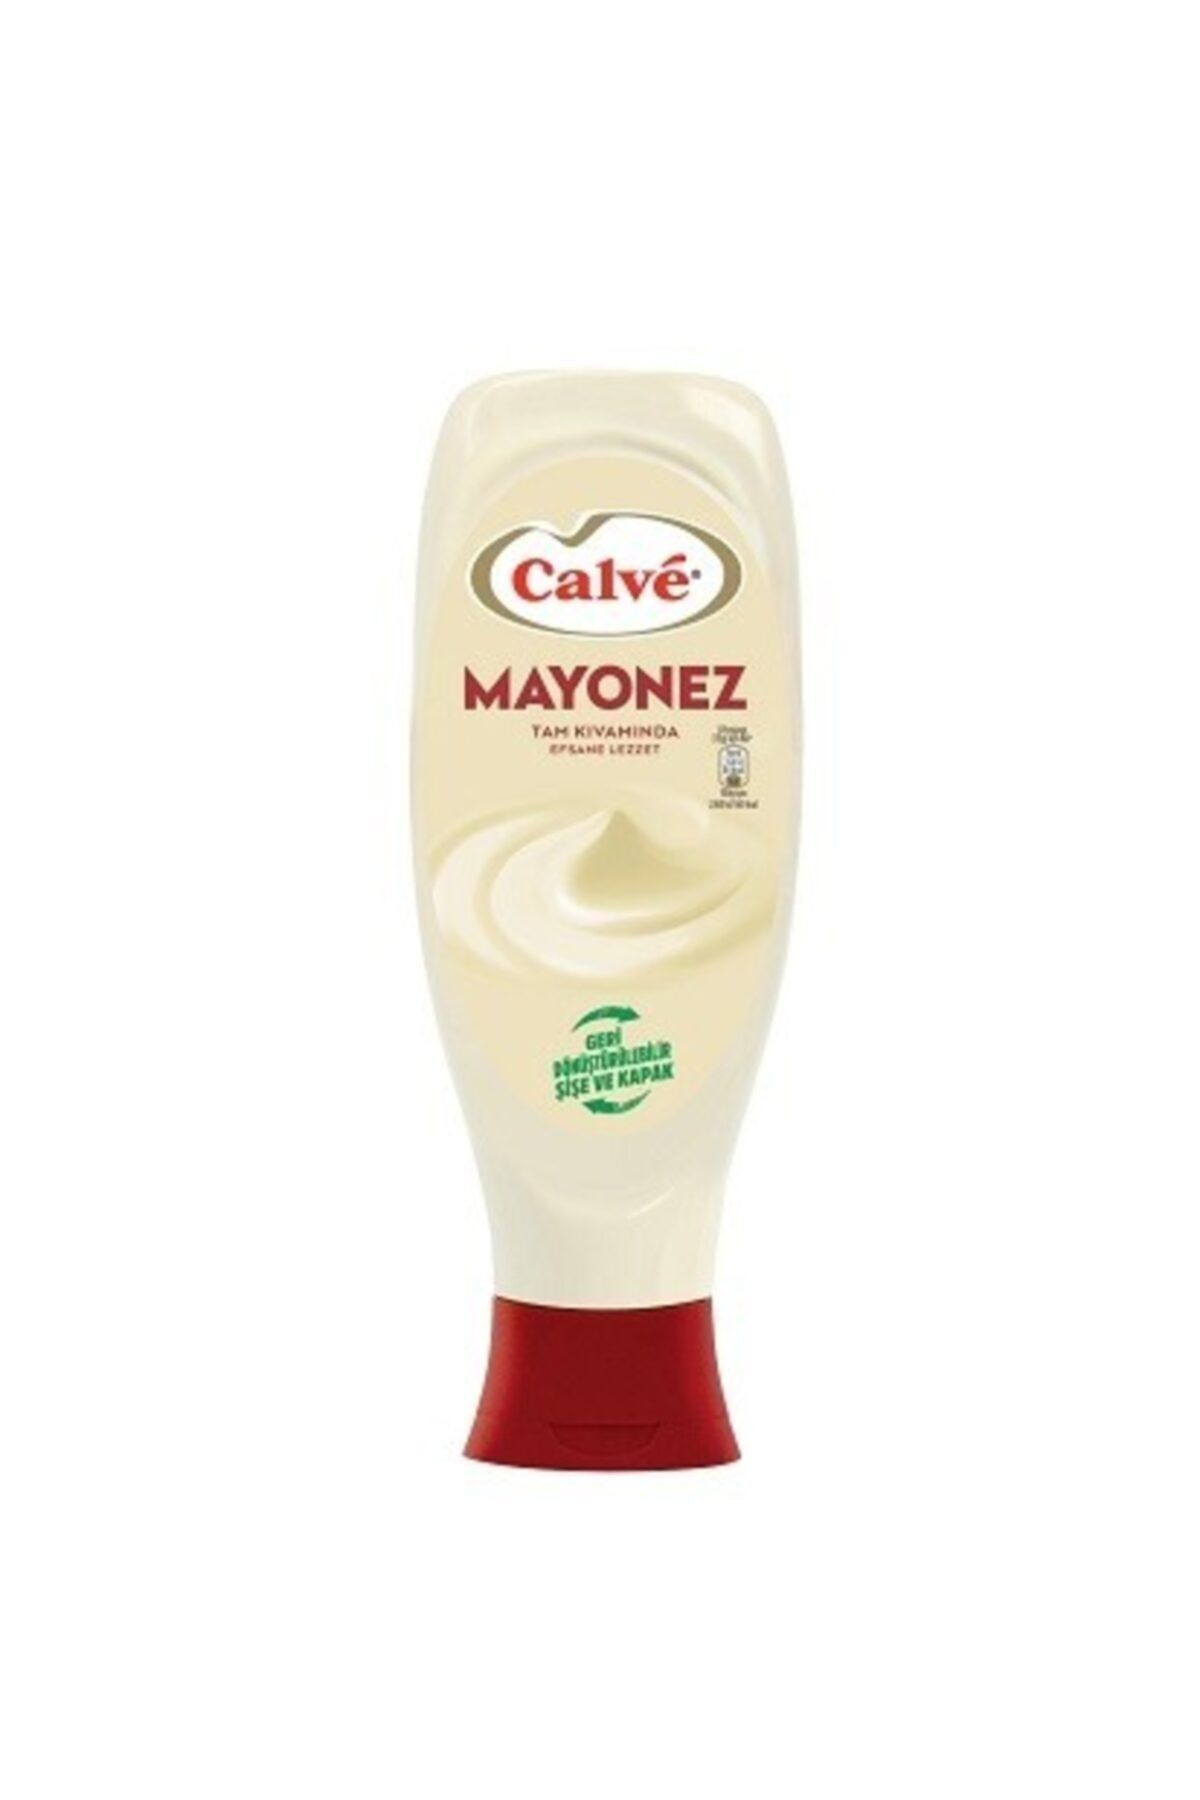 Calve Mayonez 540 ml